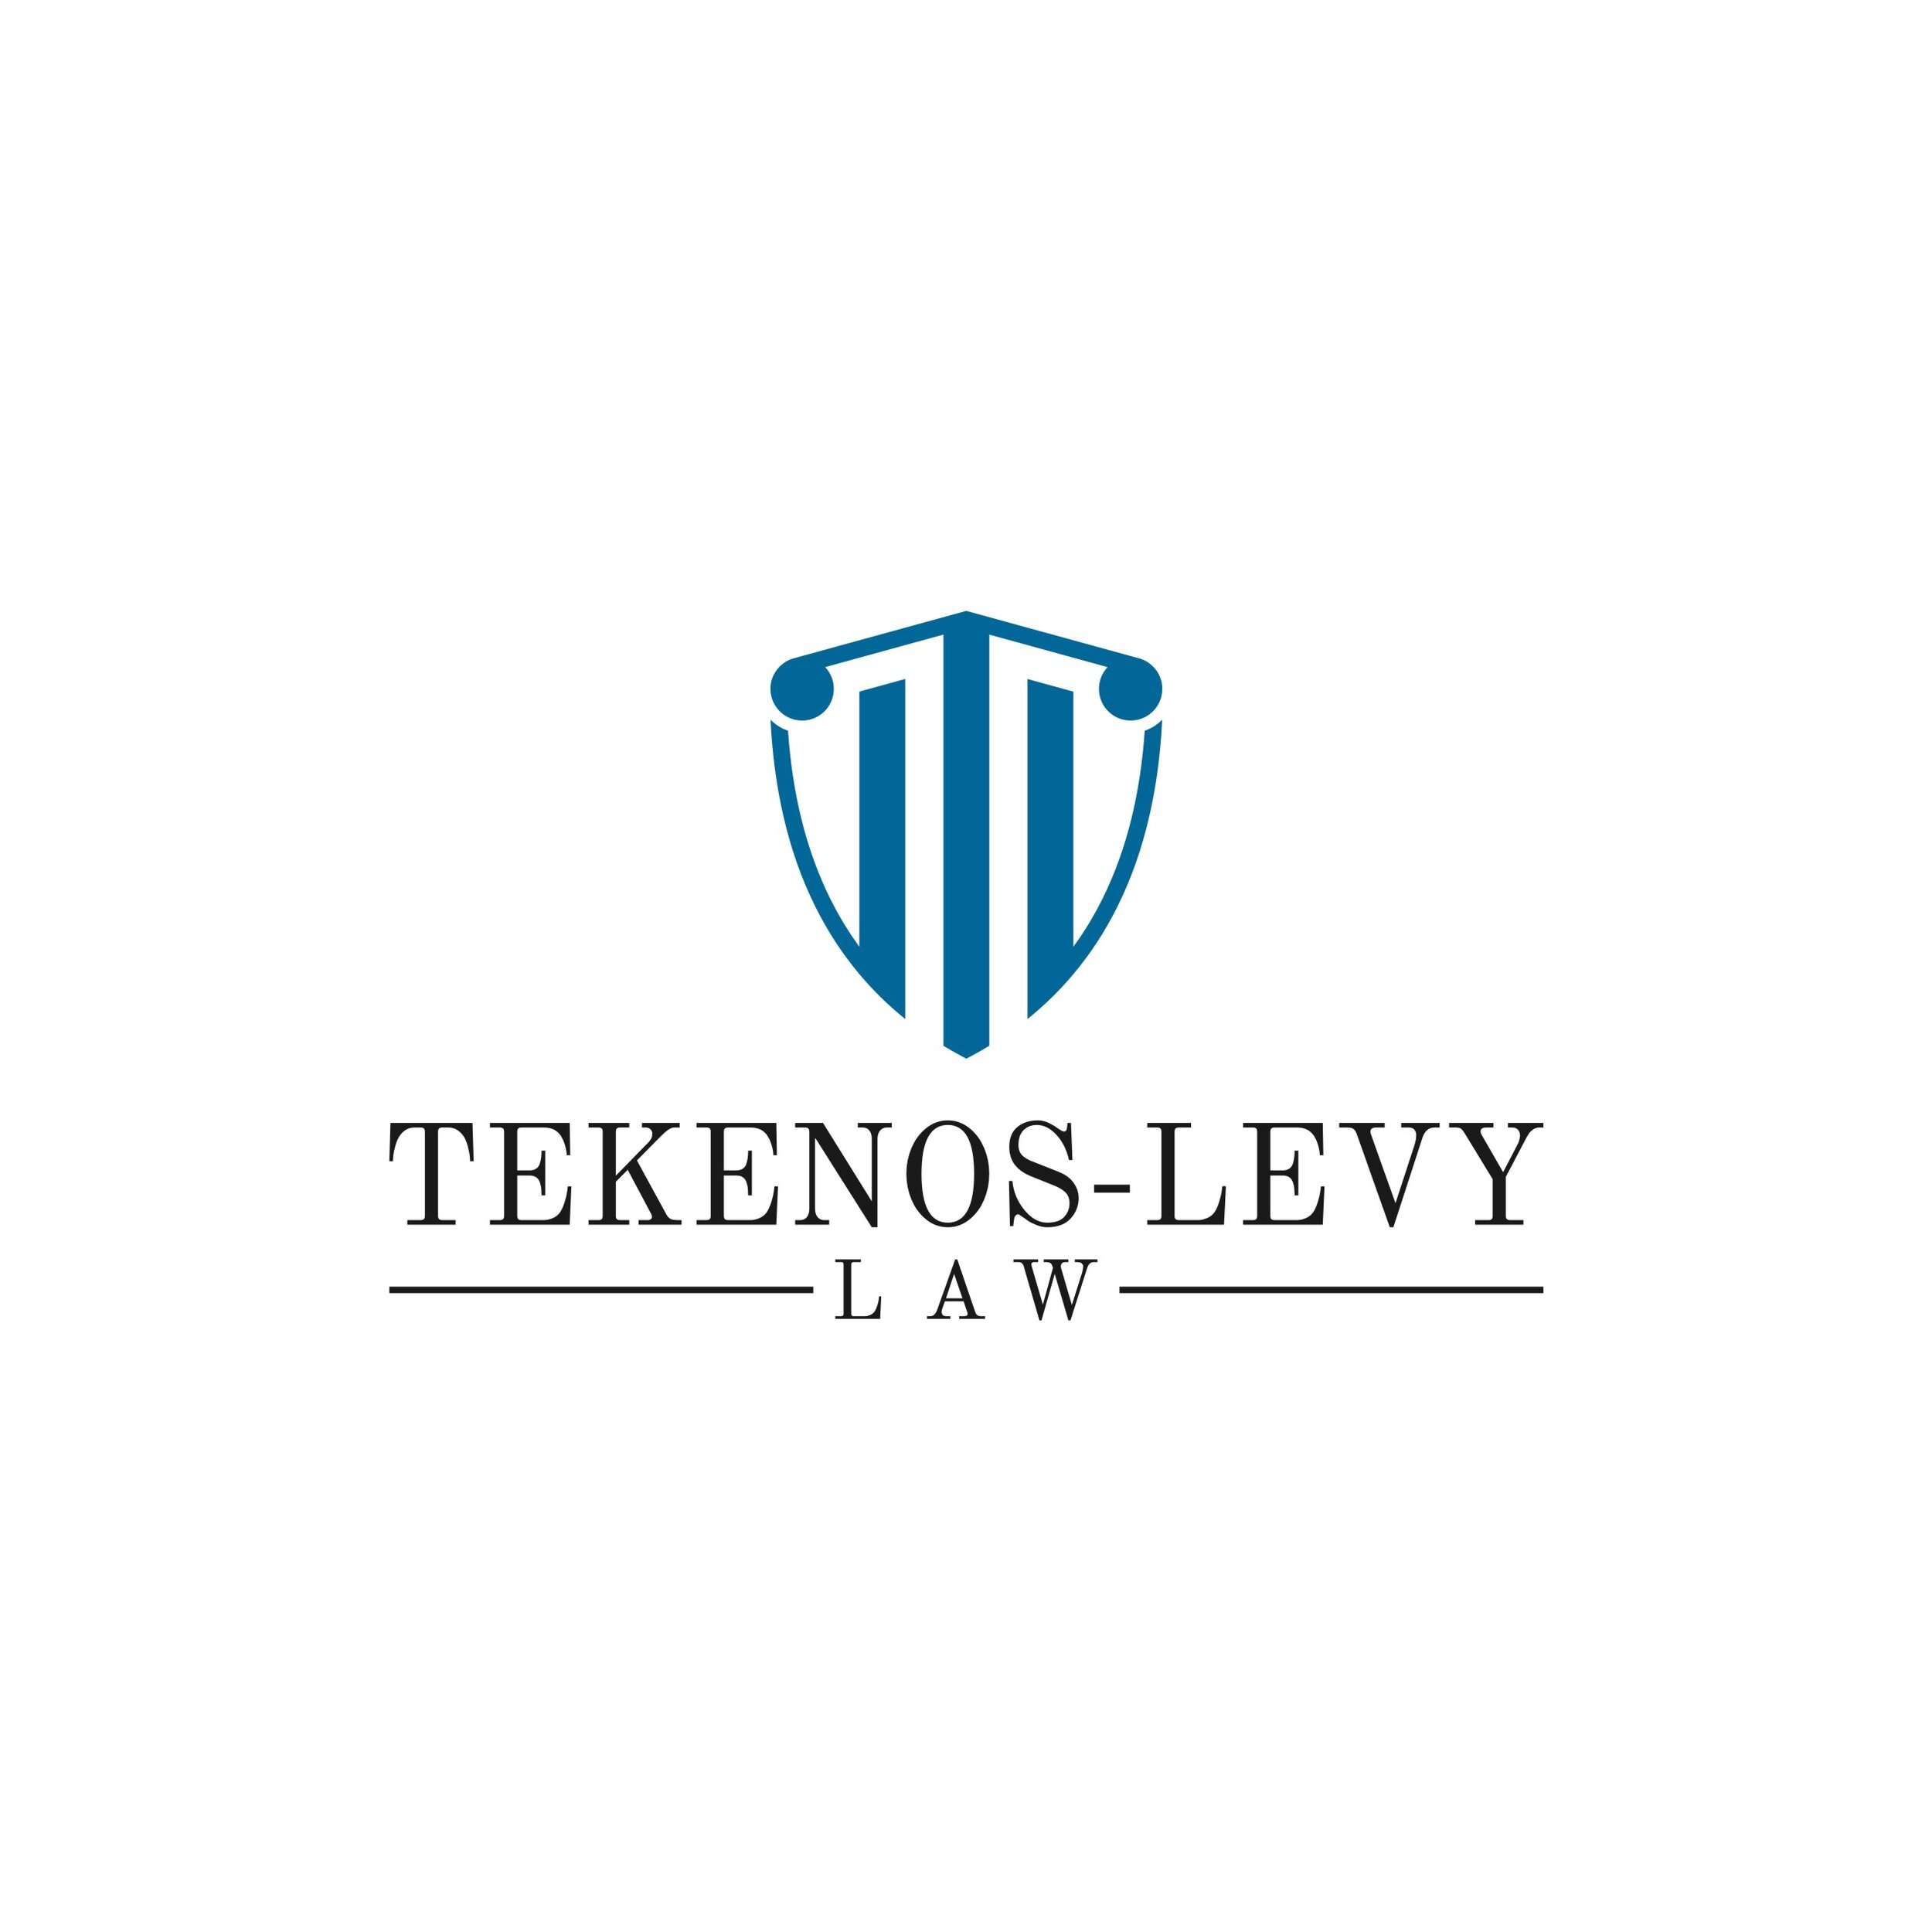 Tekenos - Levy